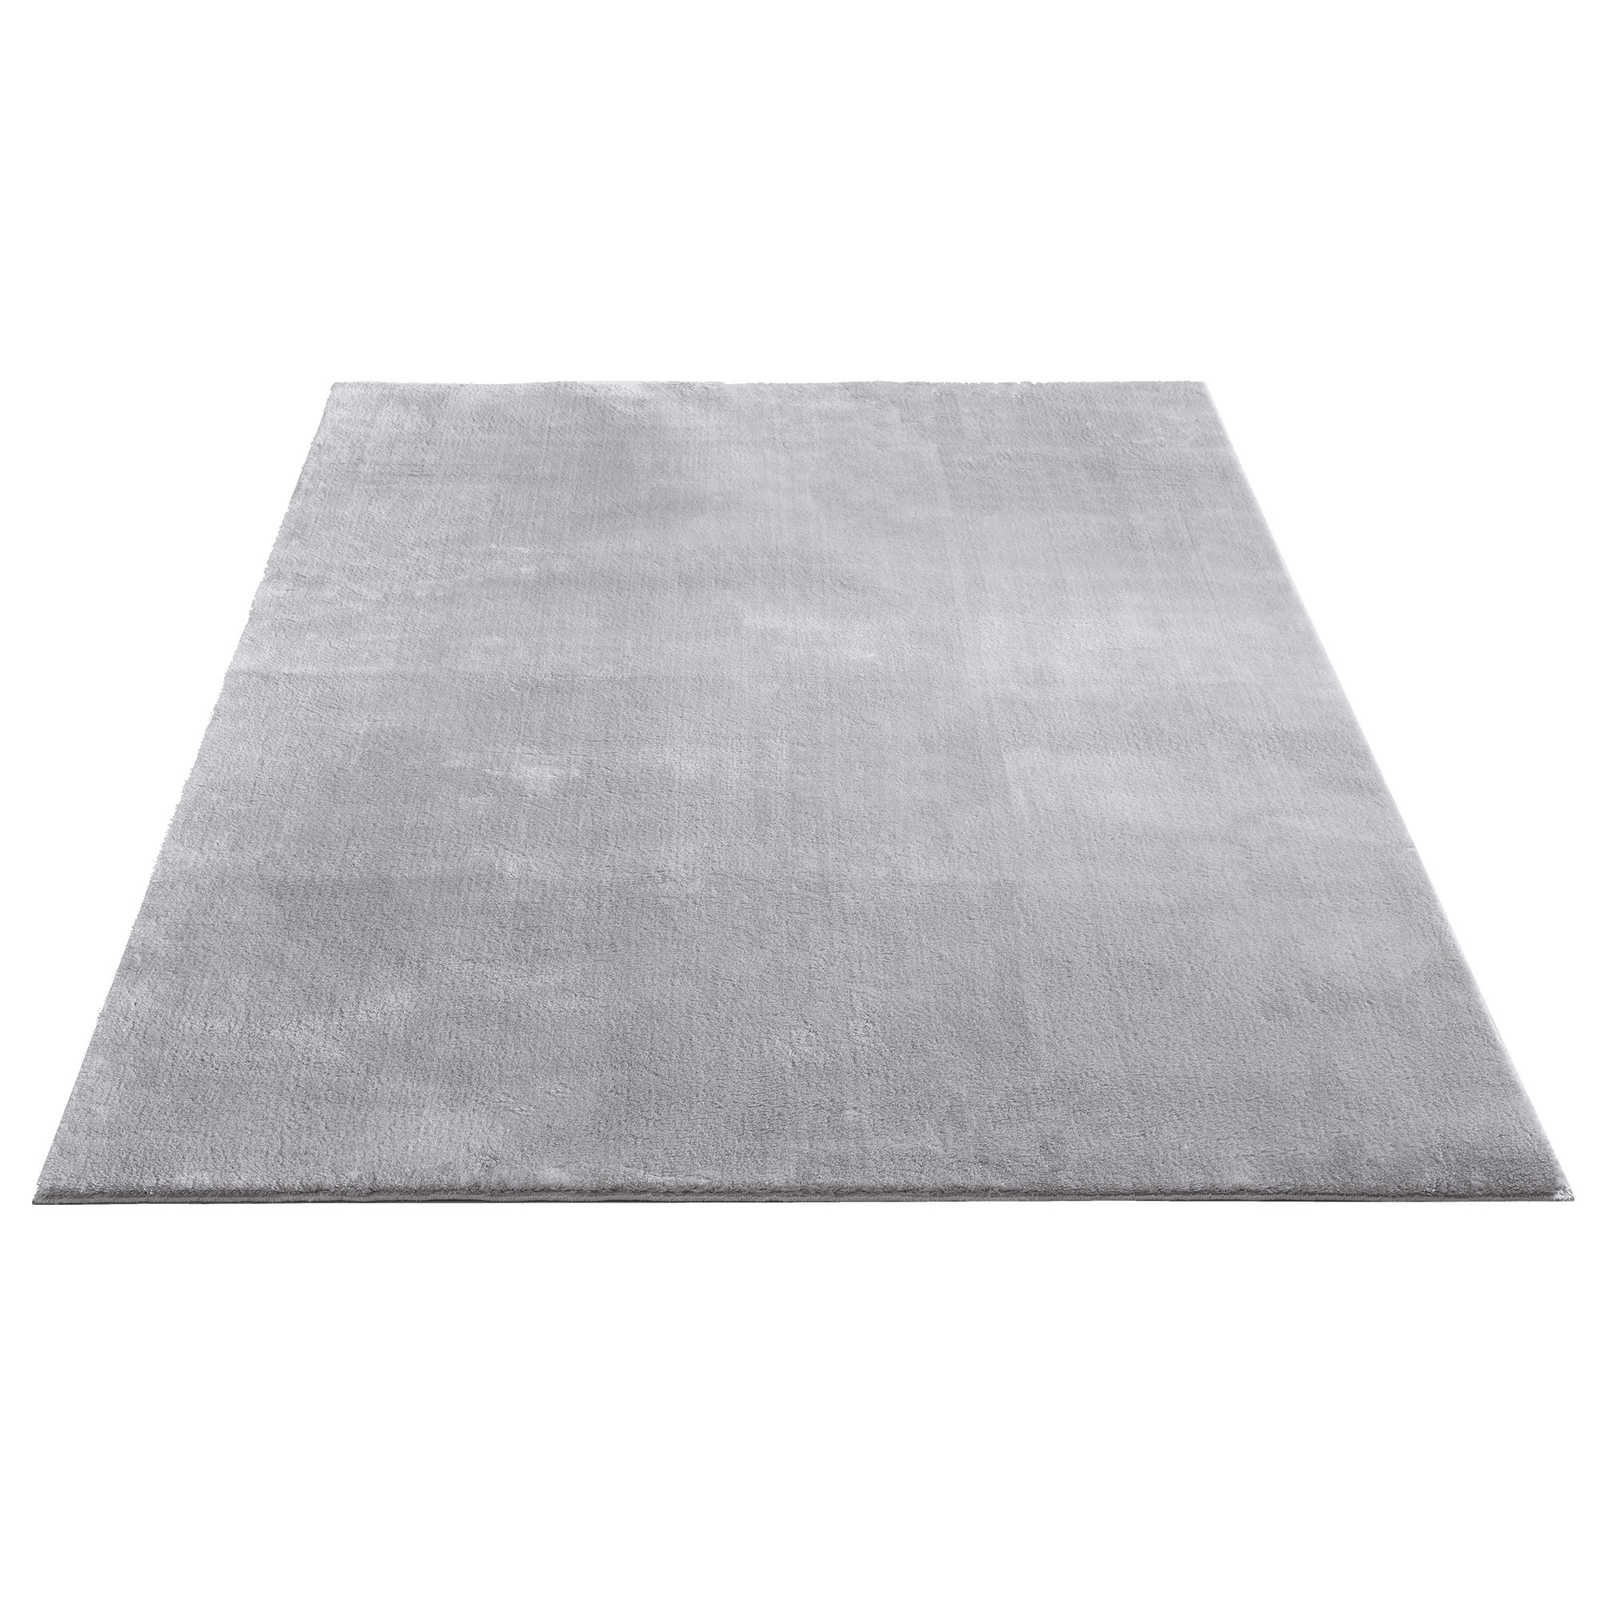 Fine high pile carpet in grey - 340 x 240 cm
